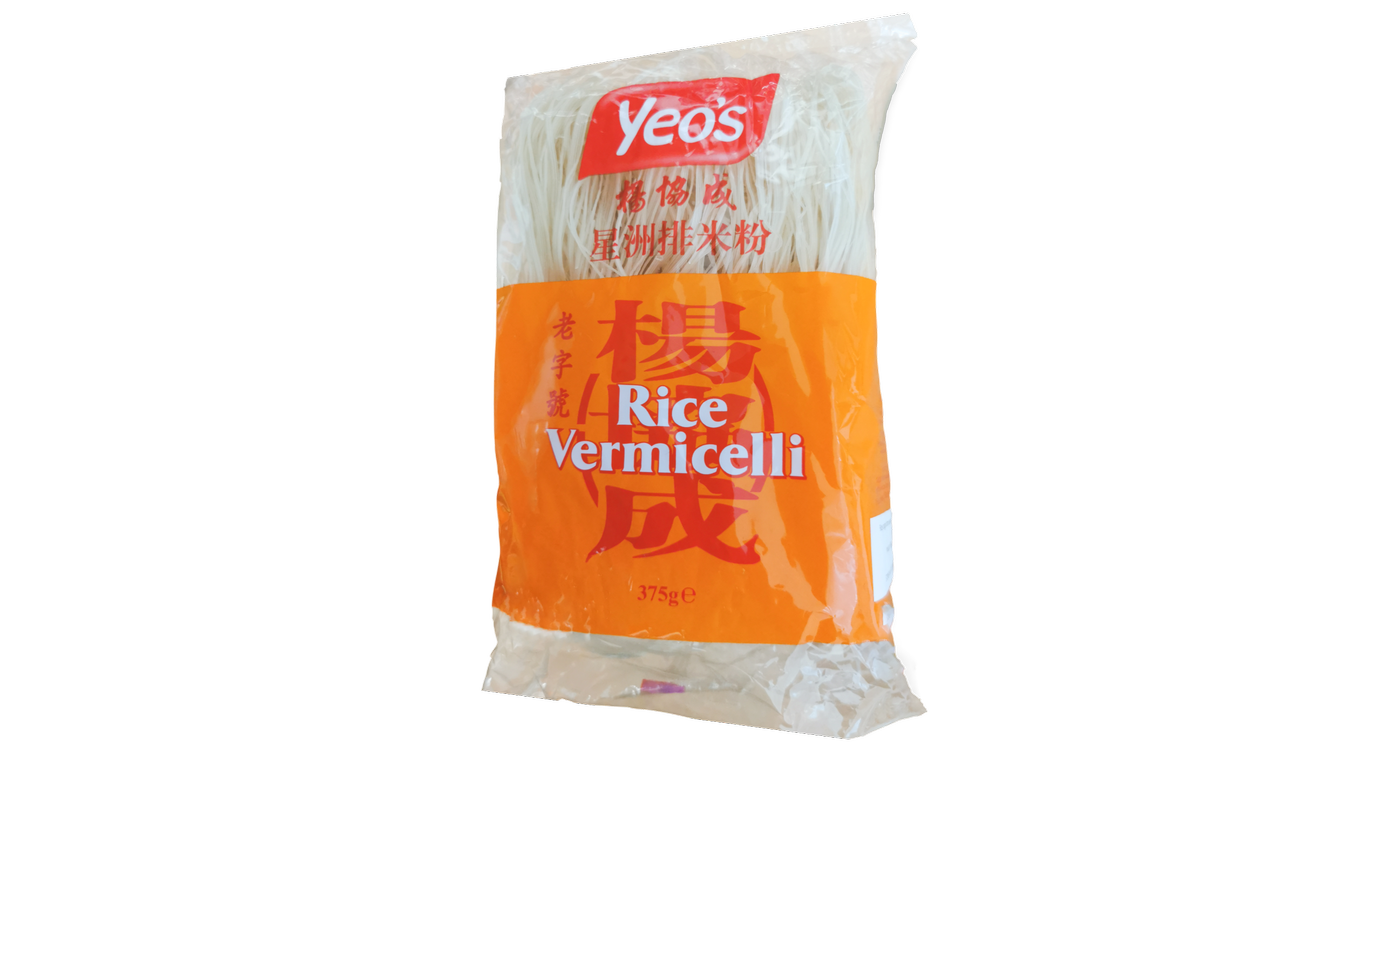 Yeos Rice Vermicelli